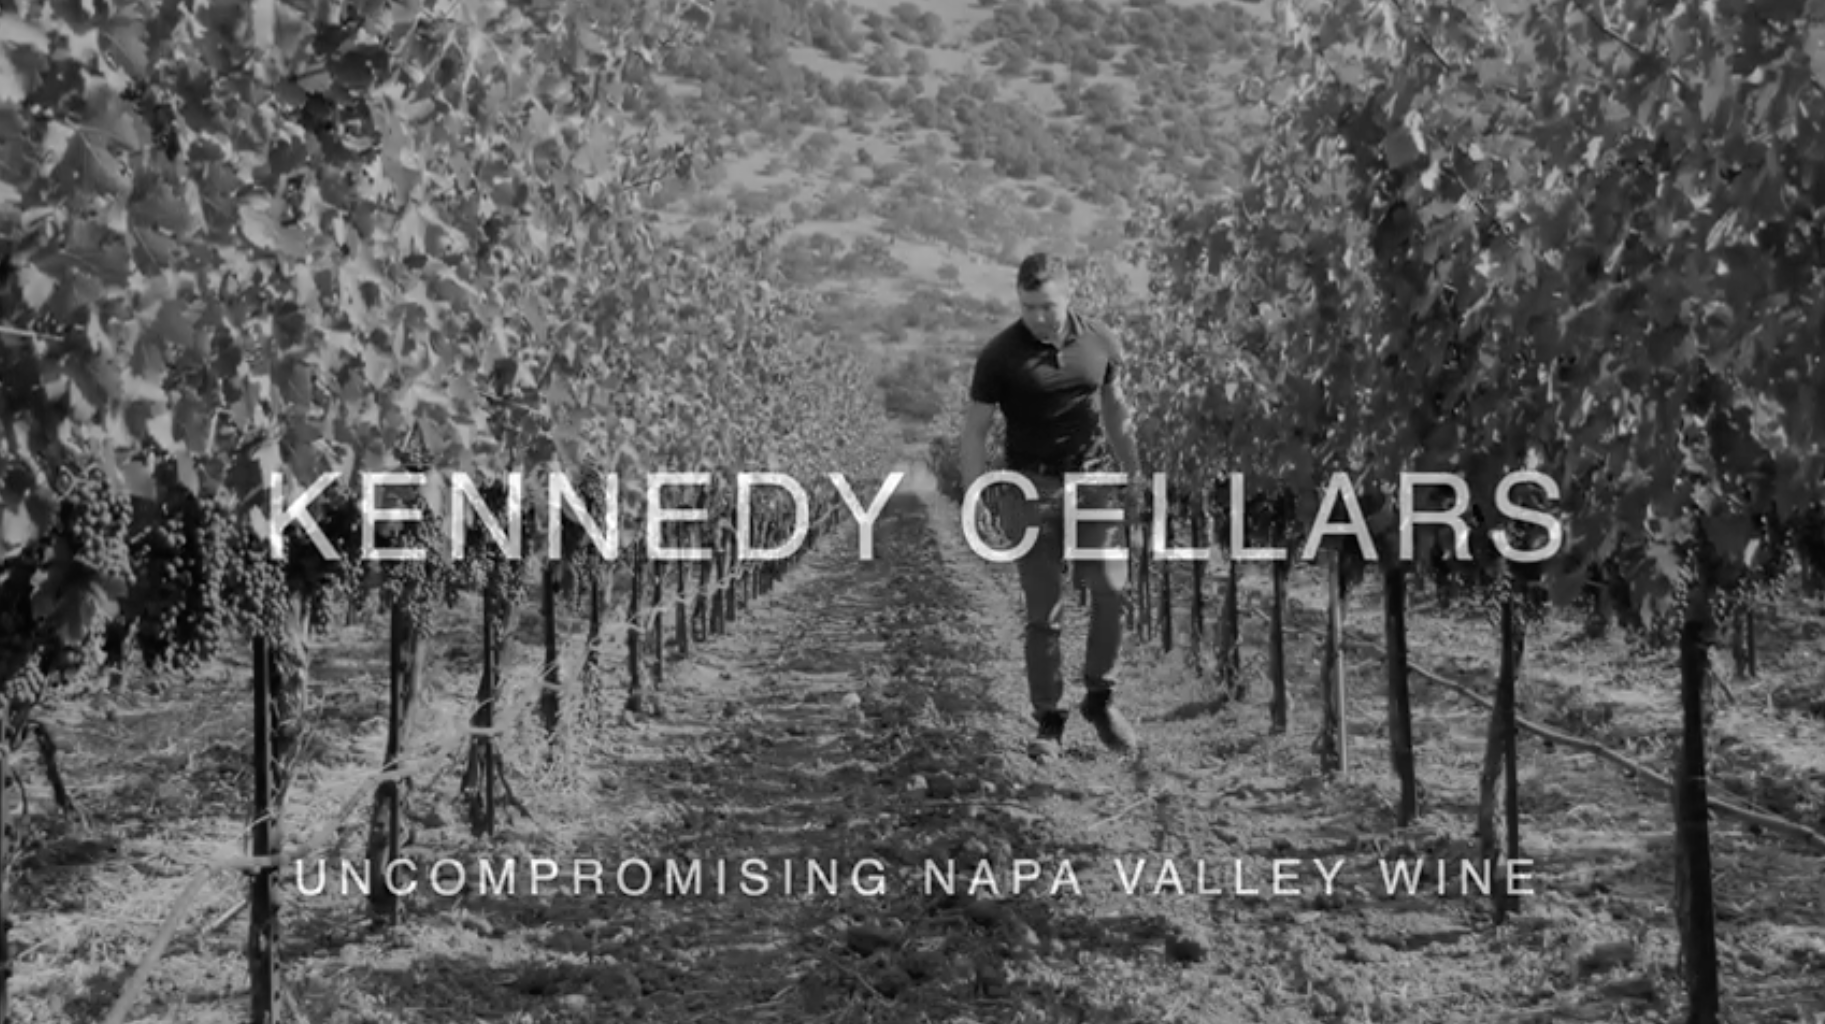 Load video: Kennedy Cellars Video